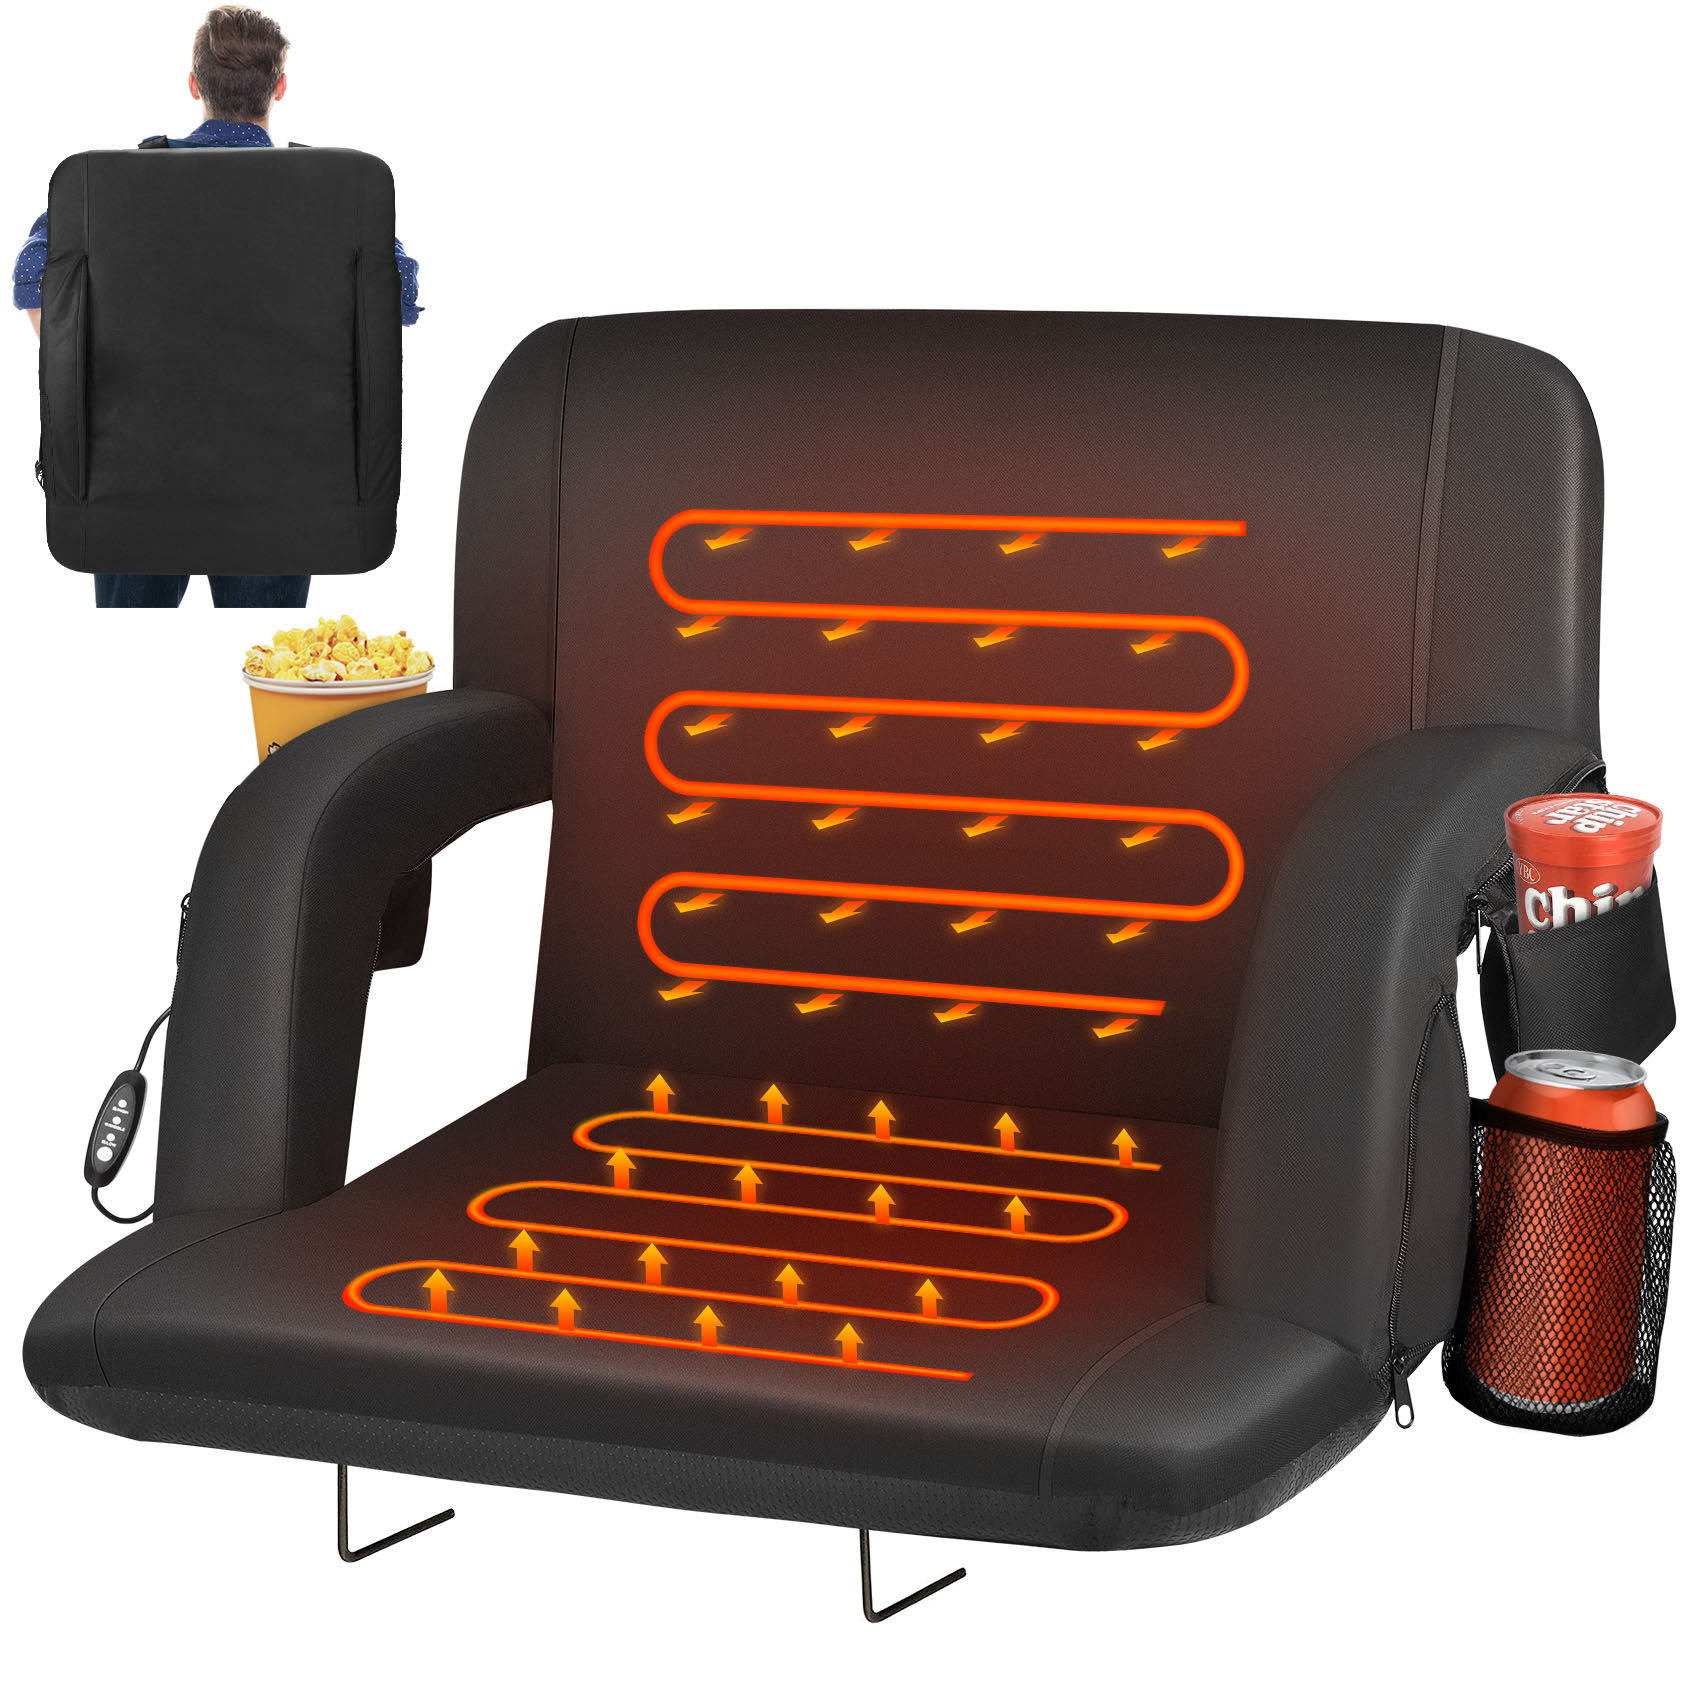 How To Make Stadium Bleacher Seat Cushion Online